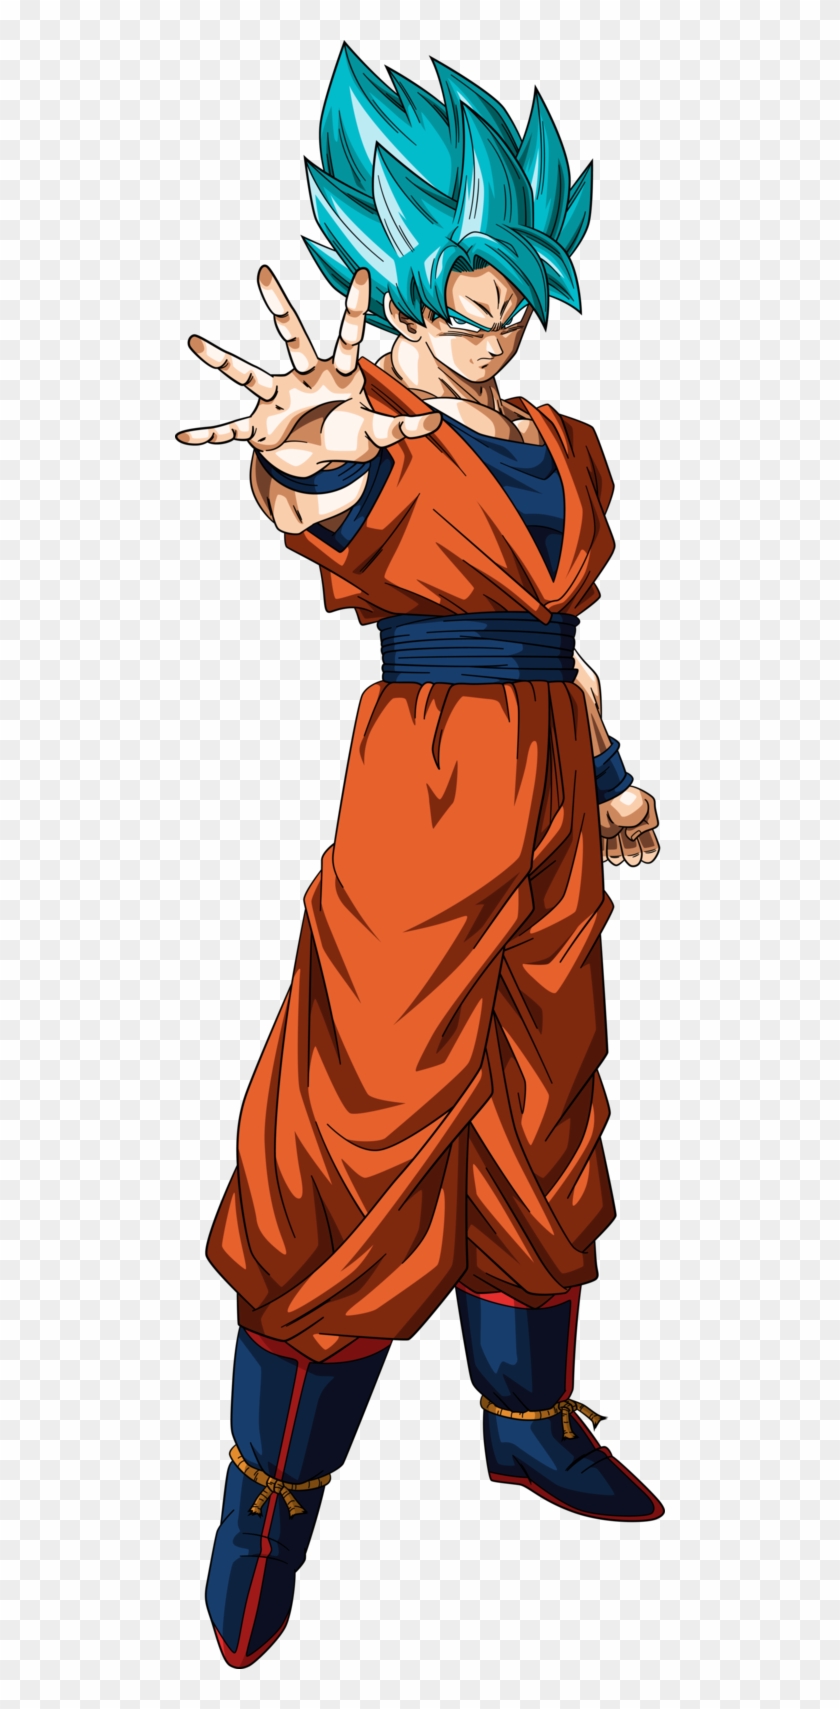 Goku Súper Saiyan Blue Más - Goku Super Saiyajin Blue Png Clipart #4488015